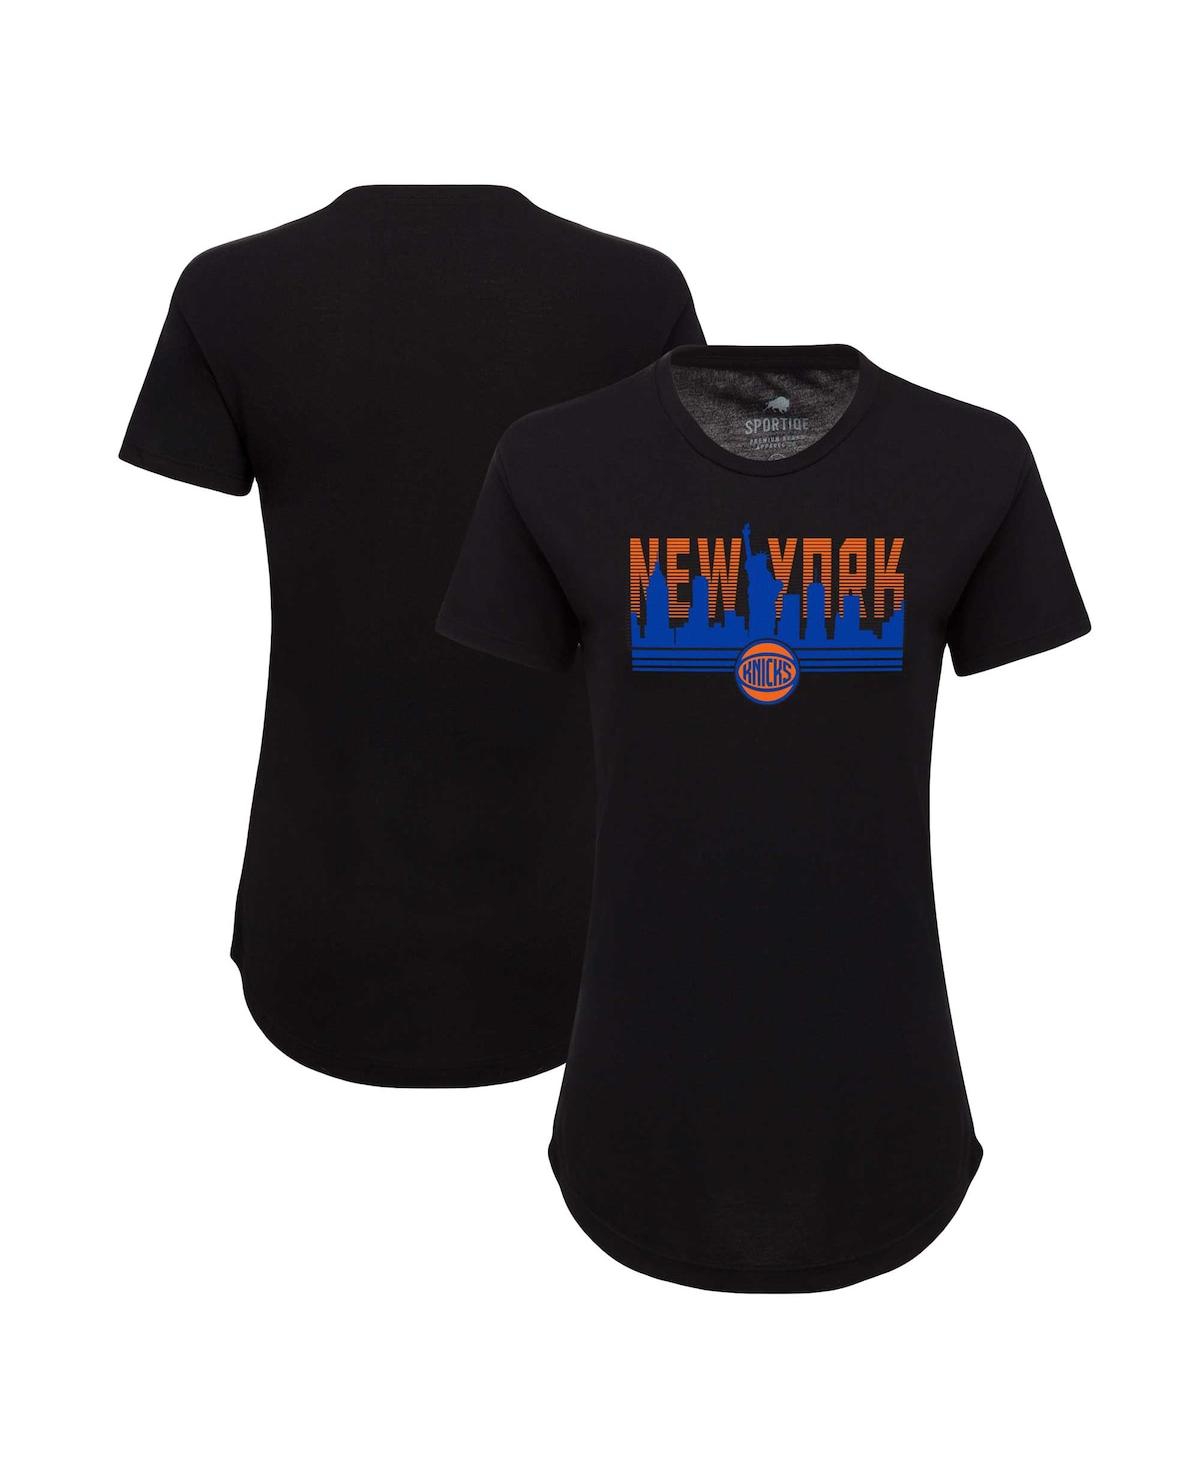 Women's Black New York Knicks Phoebe Super Soft Tri-Blend T-Shirt - Black